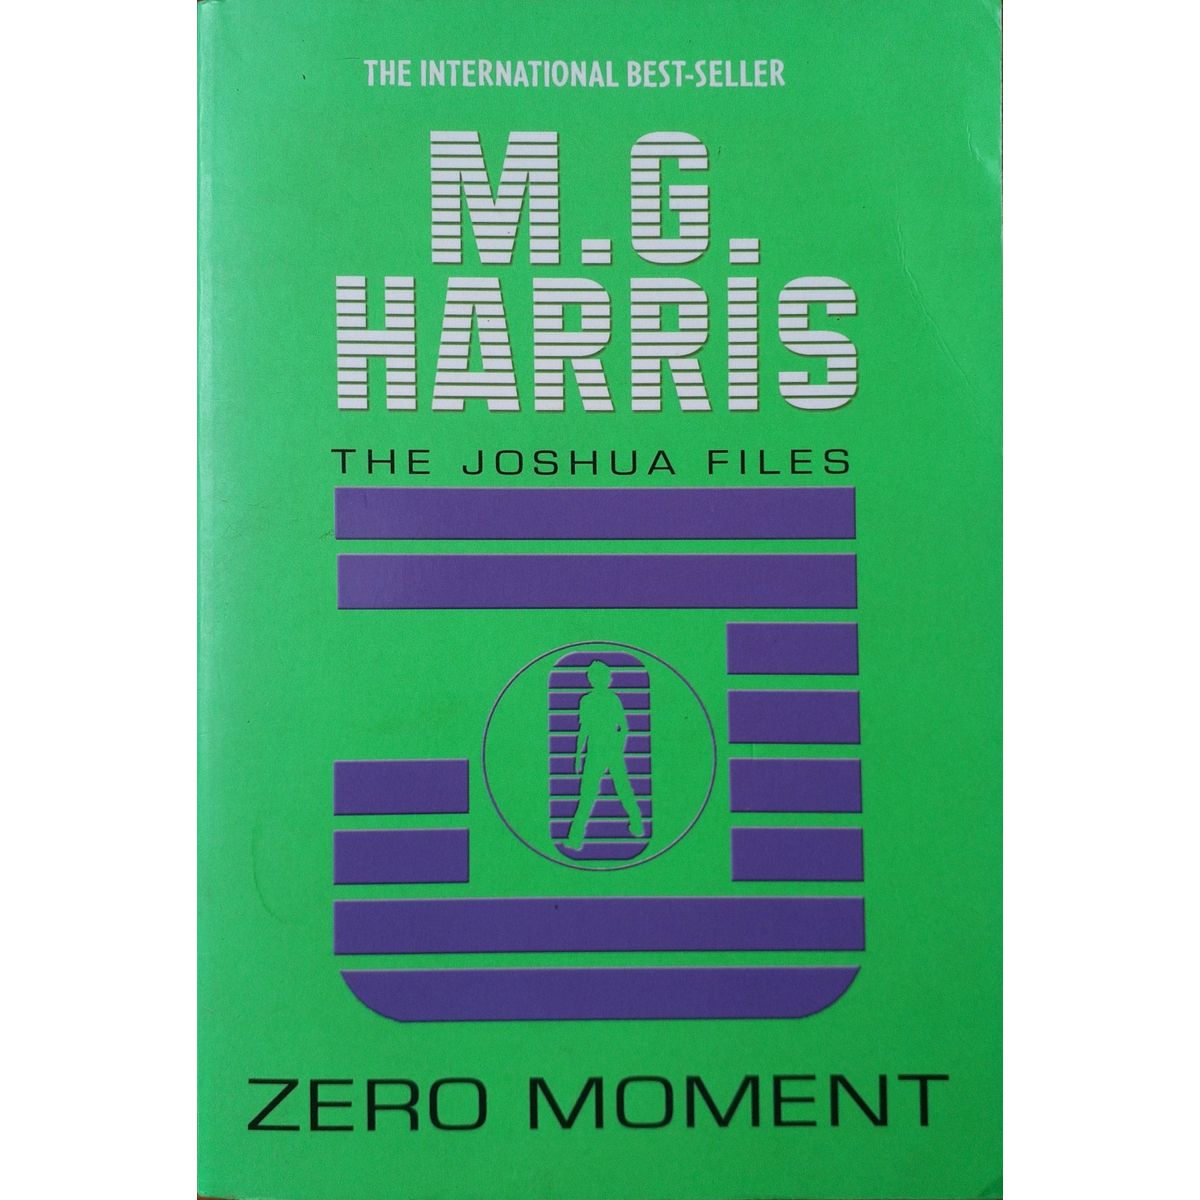 ISBN: 9781407120621 / 140712062X - Zero Moment by M.G. Harris [2010]